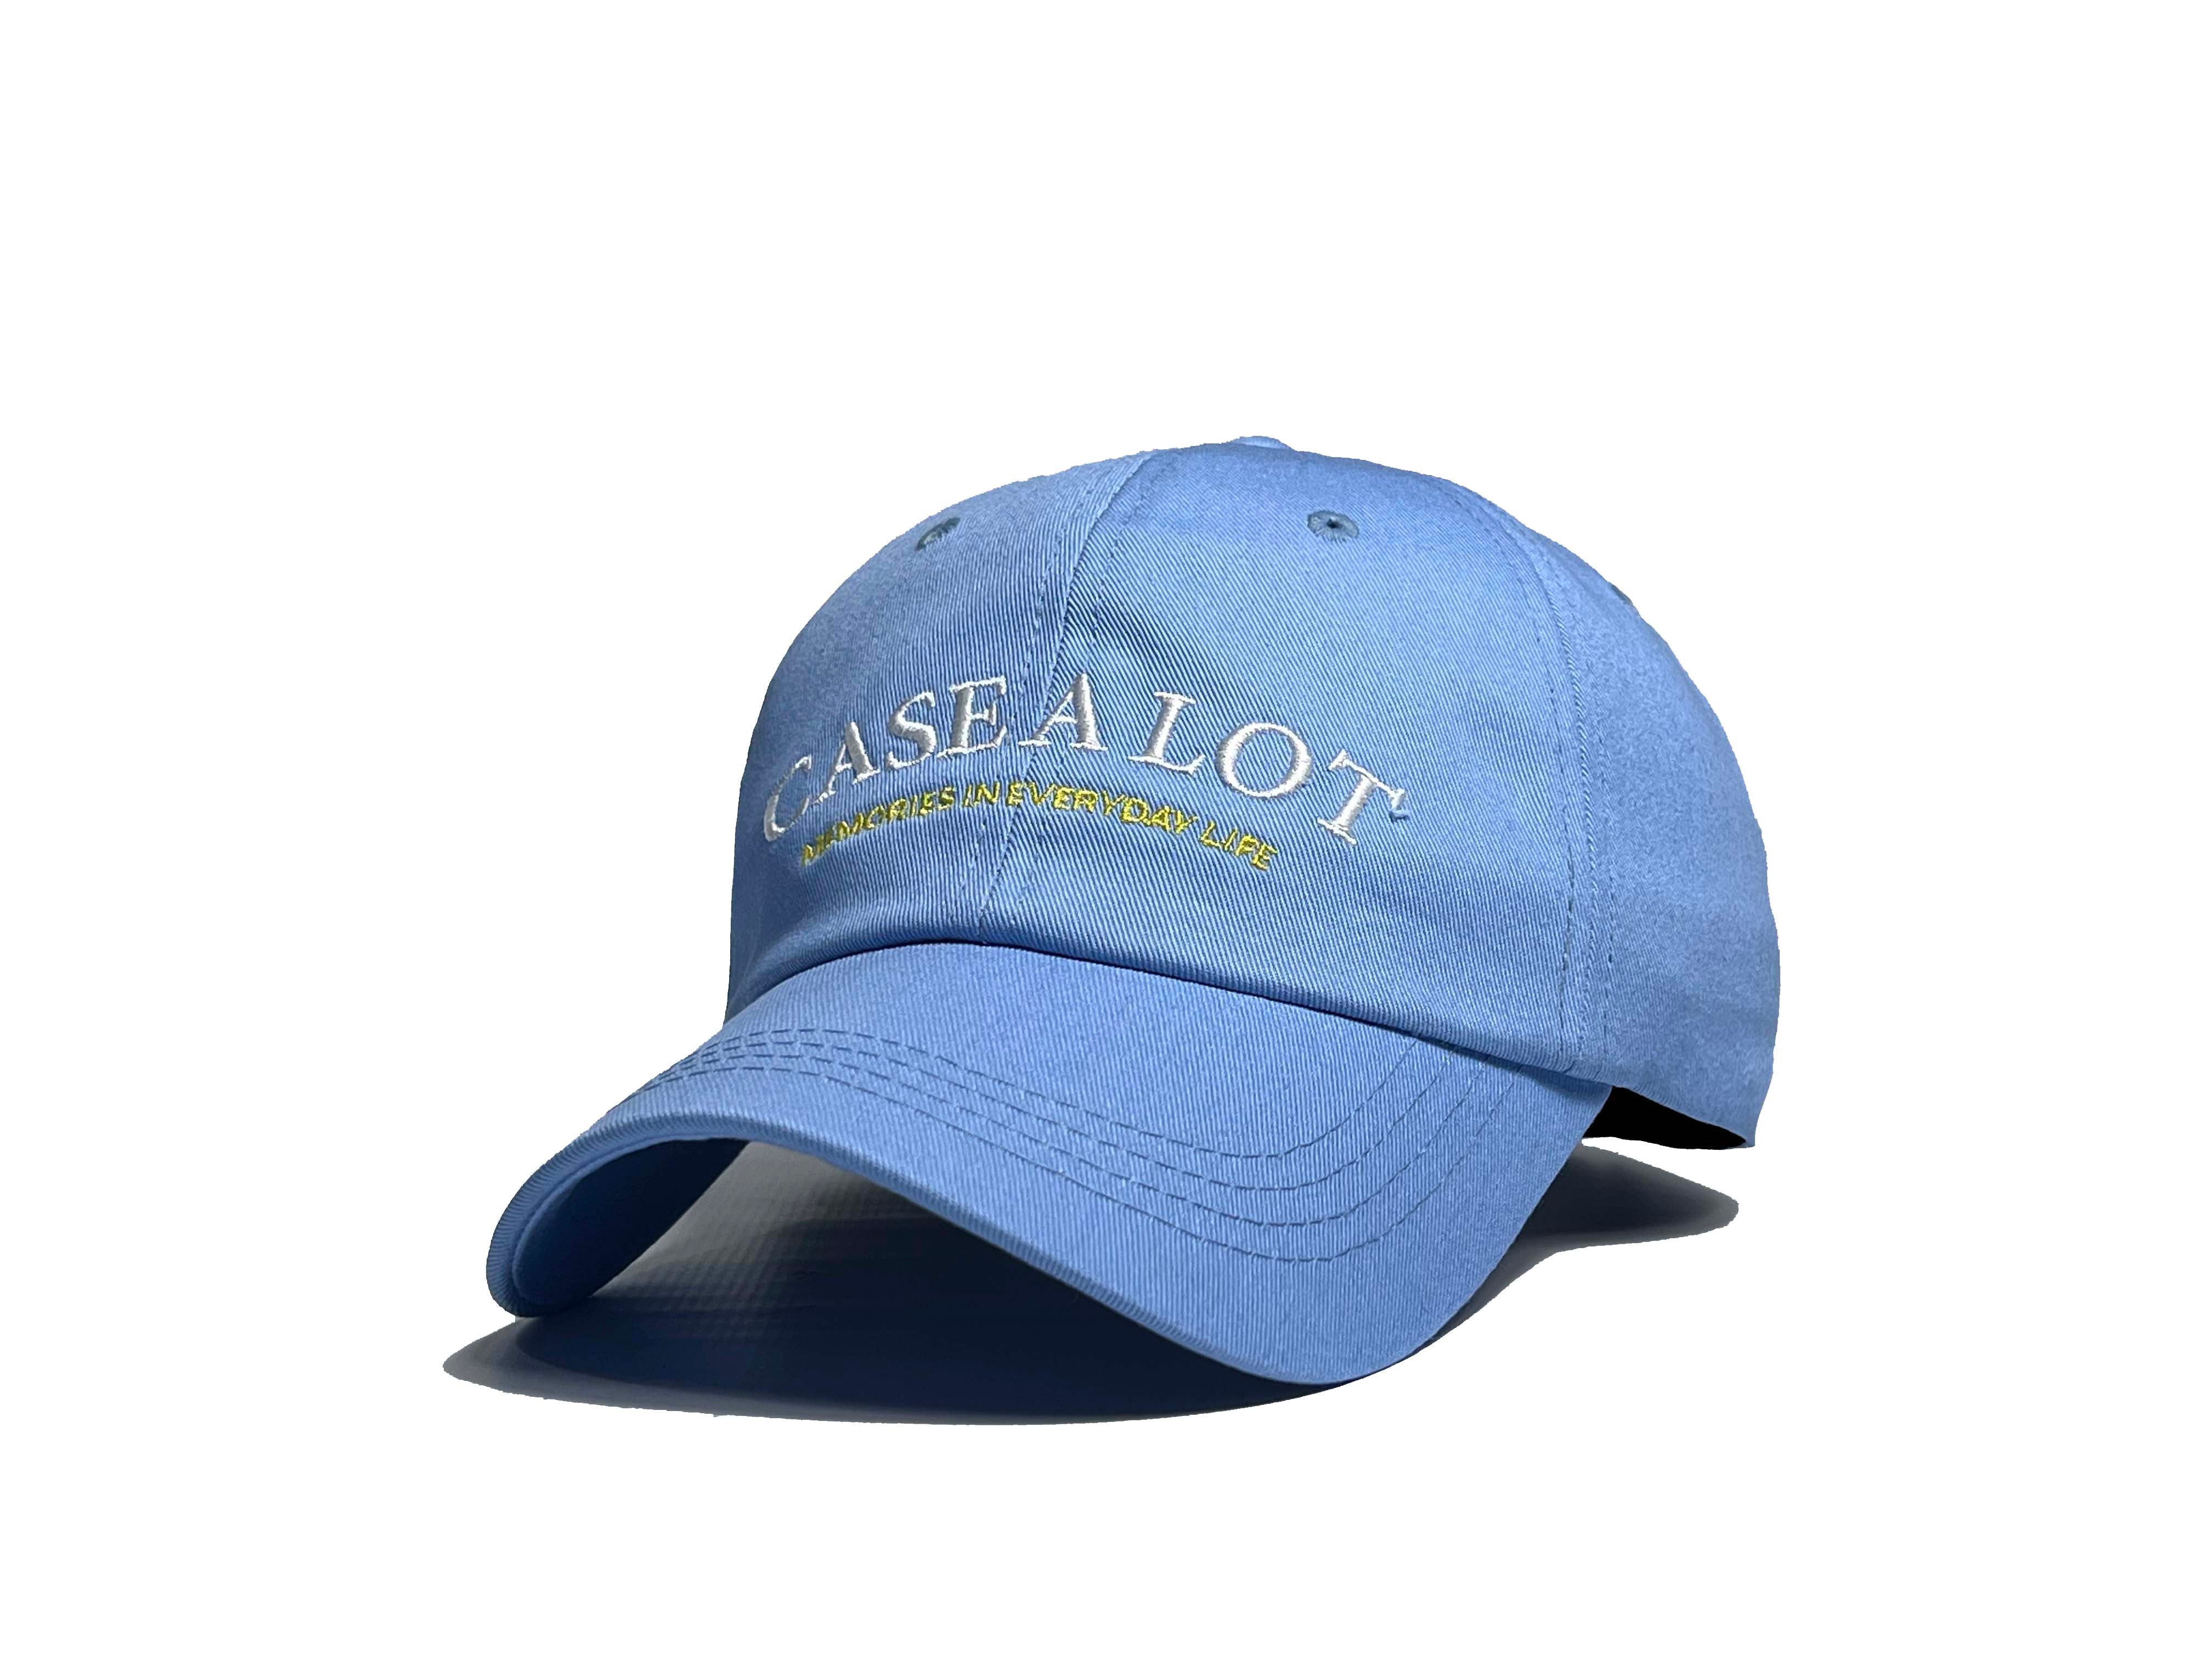 Arch logo ball cap - Sky blue